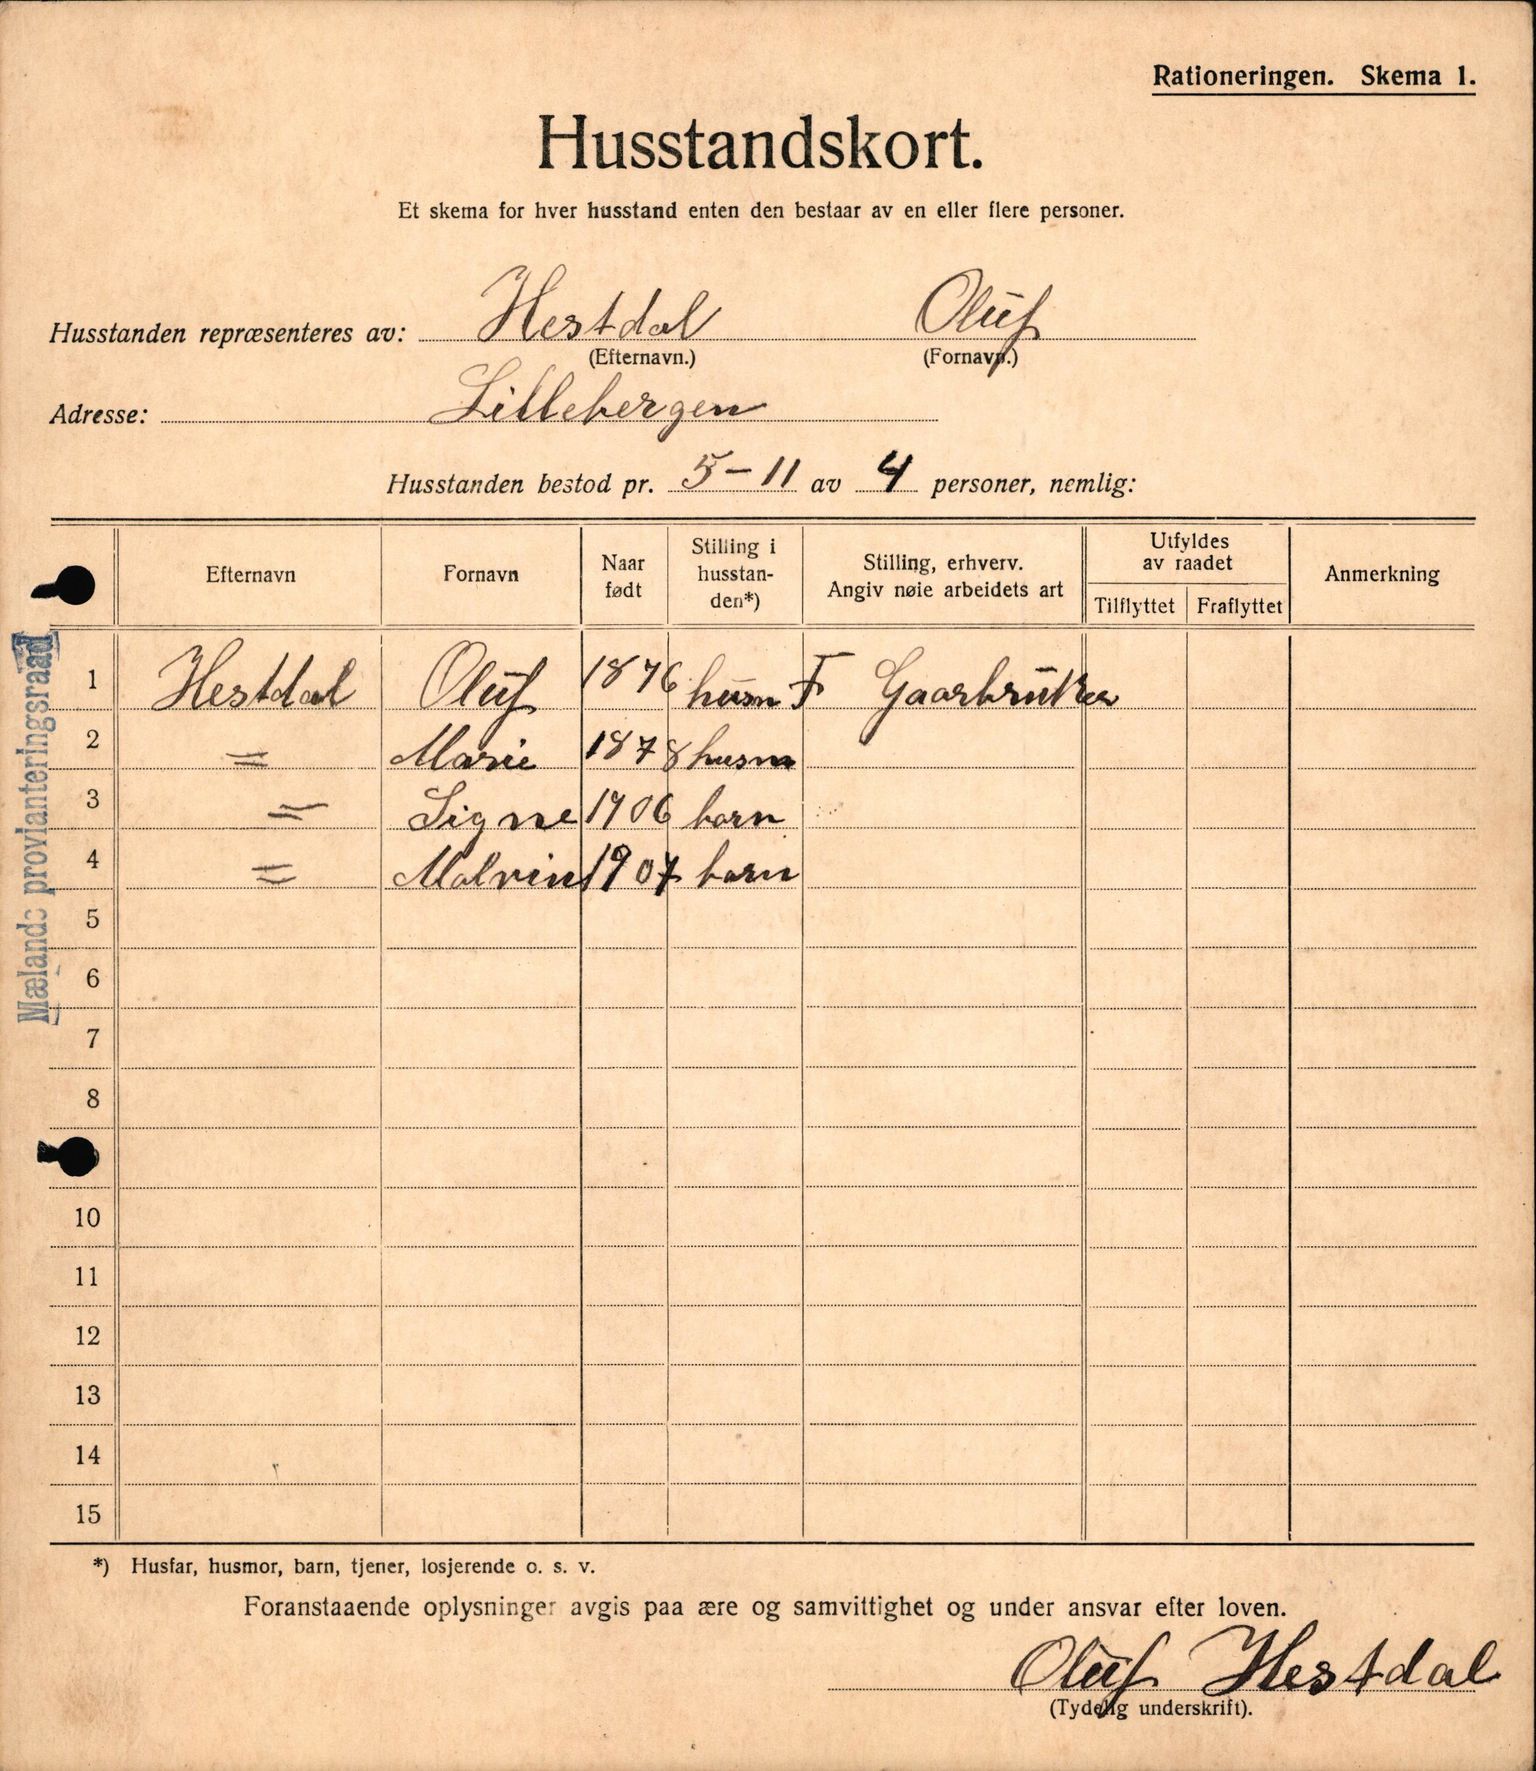 IKAH, Meland kommune, Provianteringsrådet, Husstander per 01.11.1917, 1917-1918, p. 271